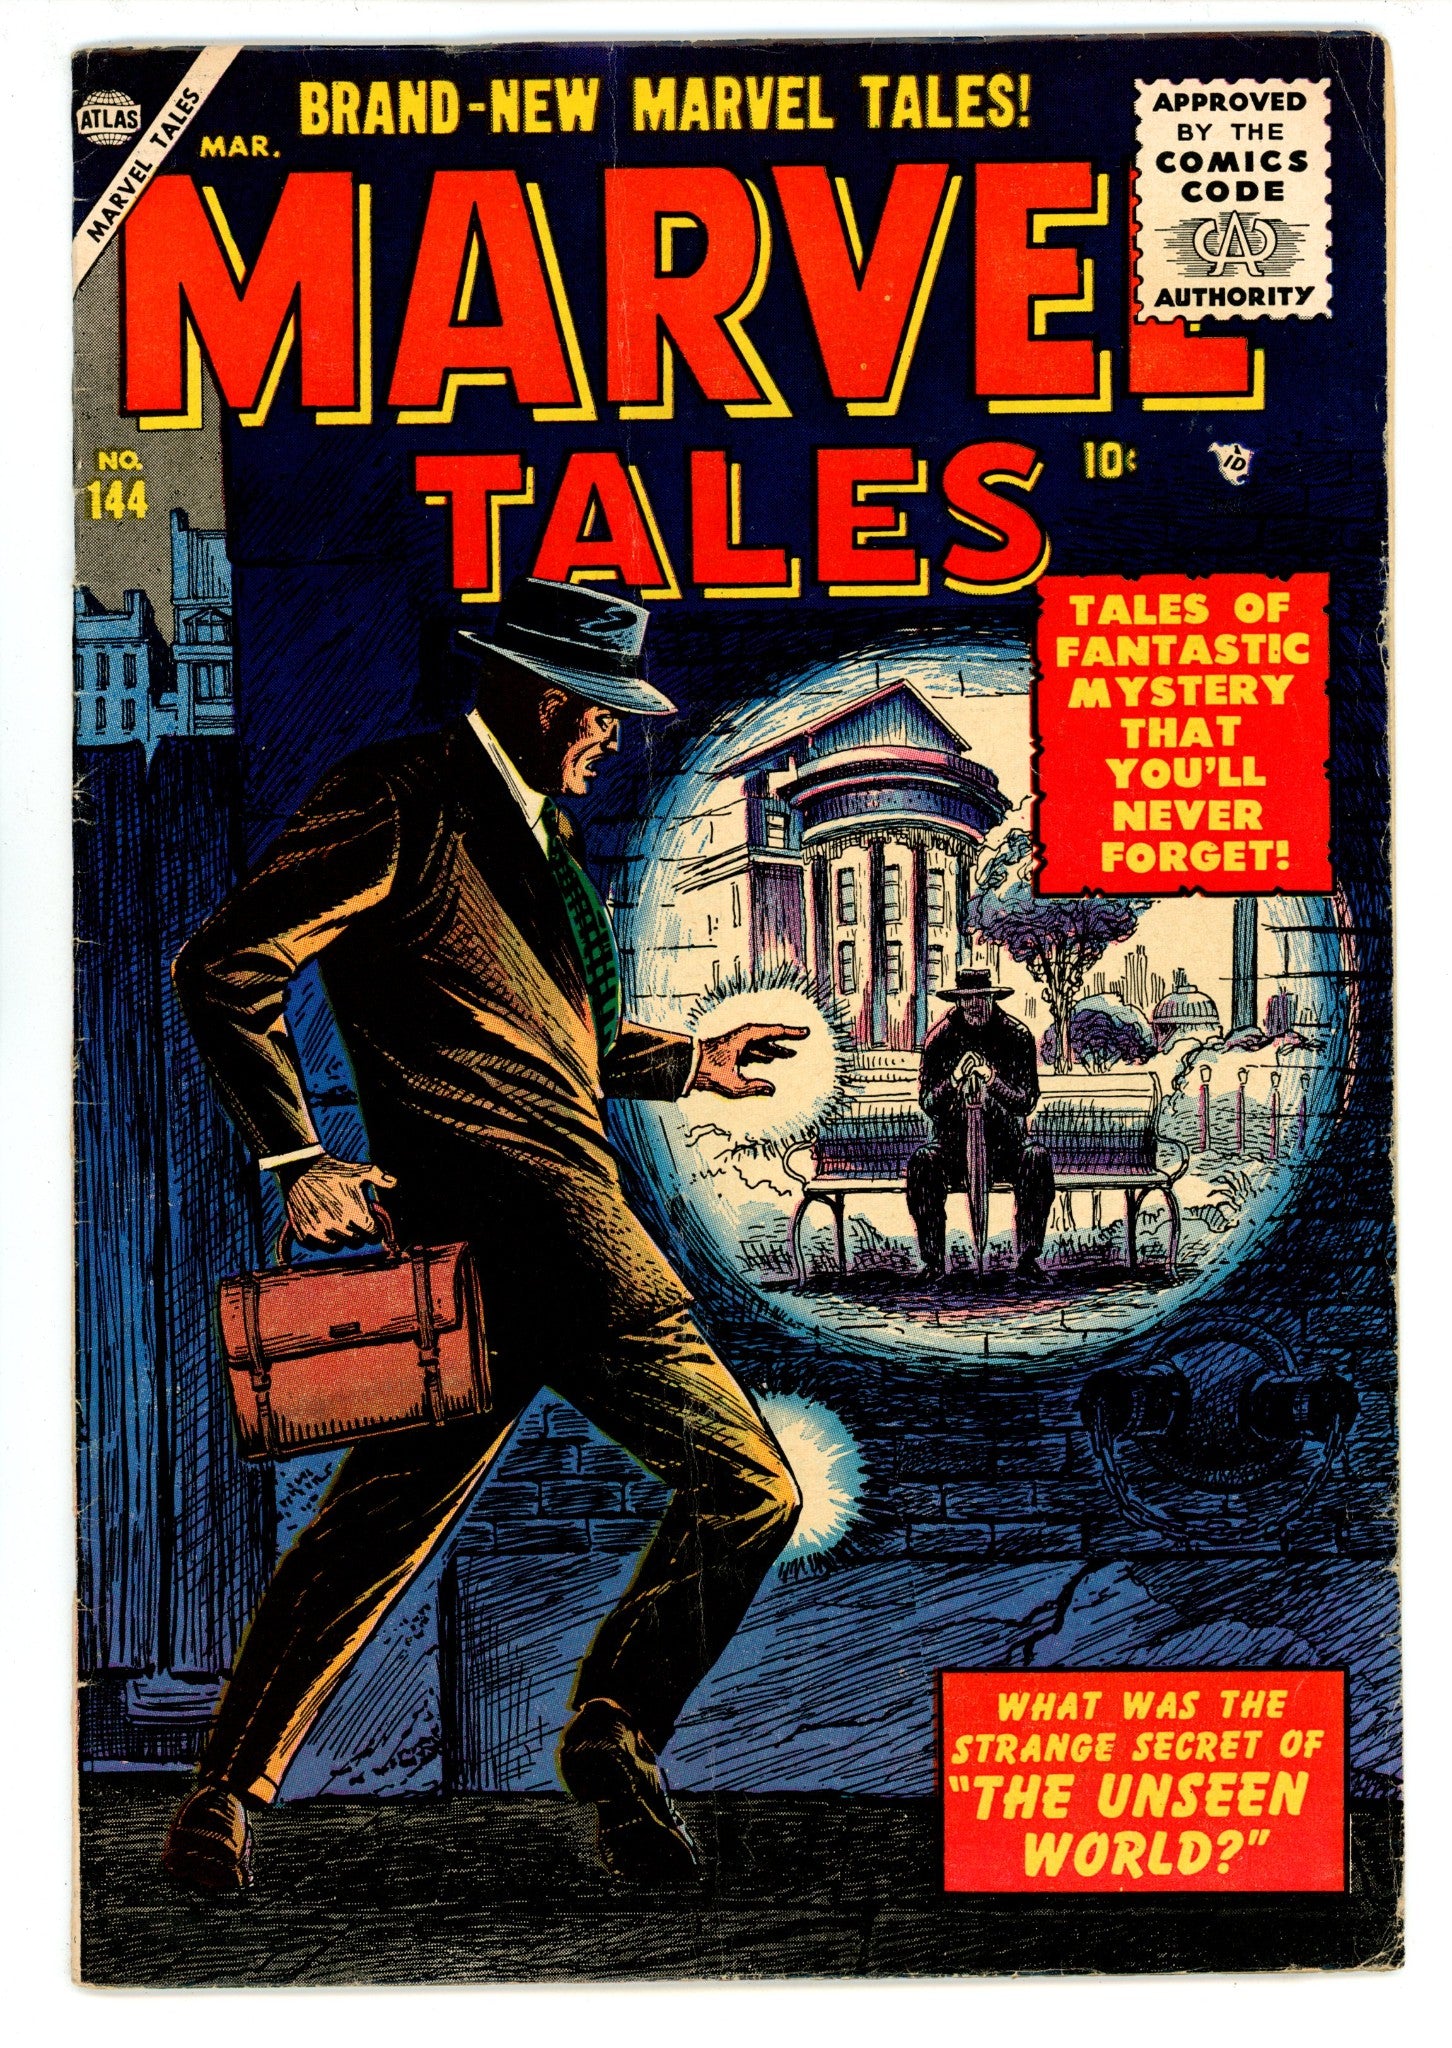 Marvel Tales Vol 1 144 VG/FN (5.0) (1956) 